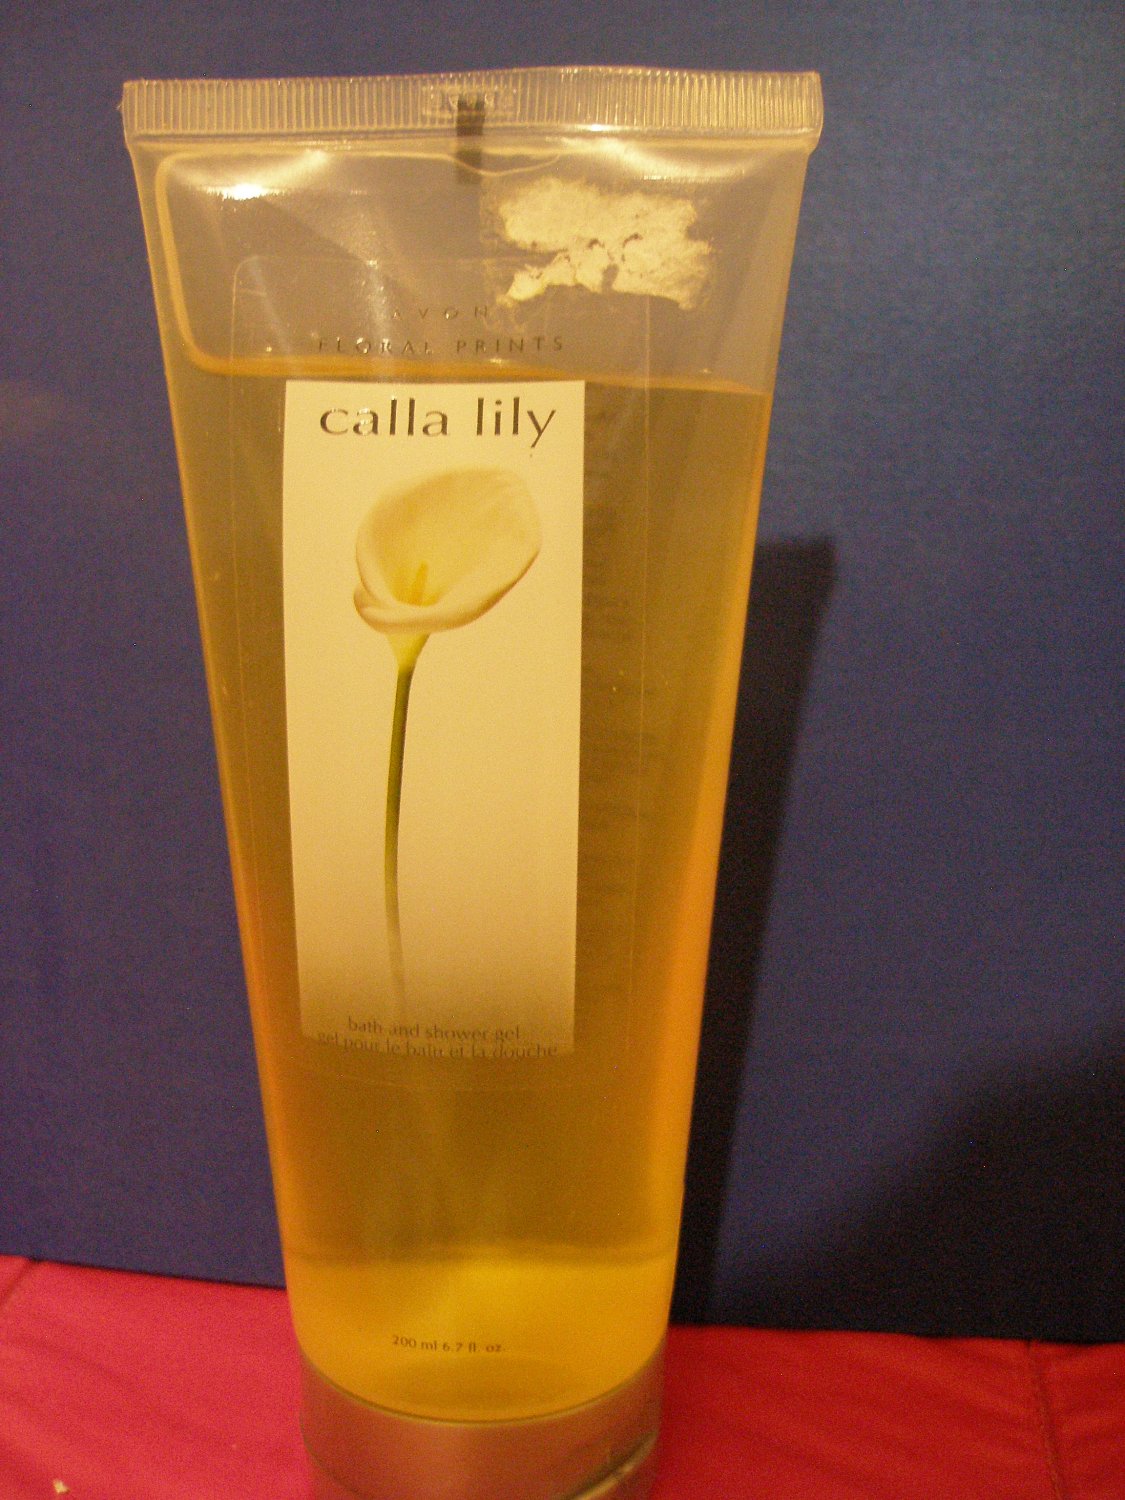 Avon Floral Prints Calla Lily Bath and Shower Gel